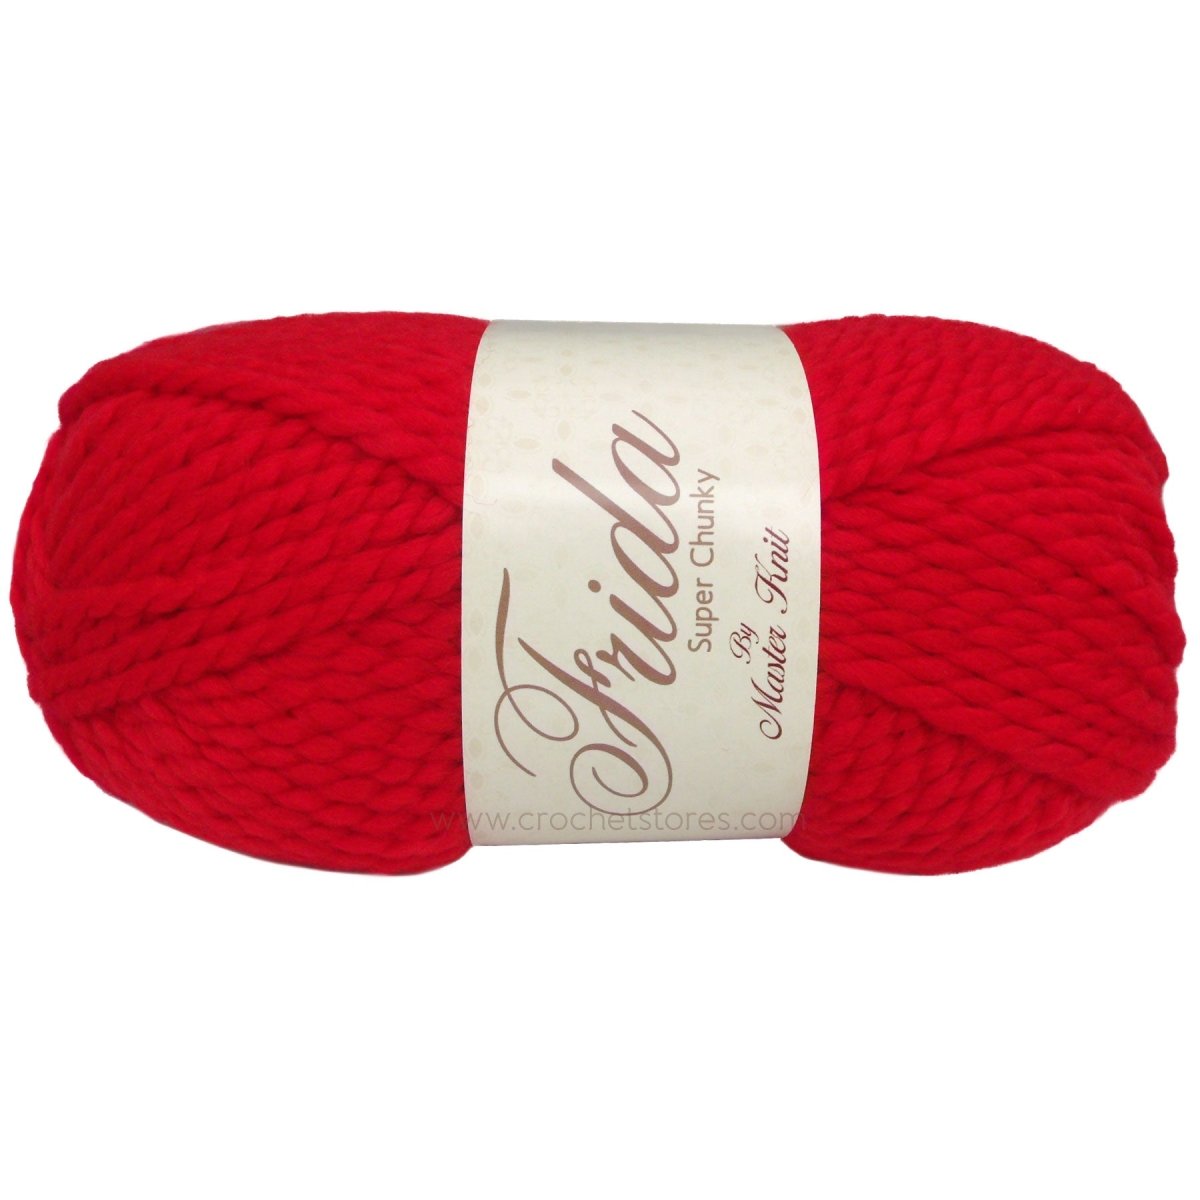 FRIDA SUPER CHUNKY - Crochetstores9470-131745051437404